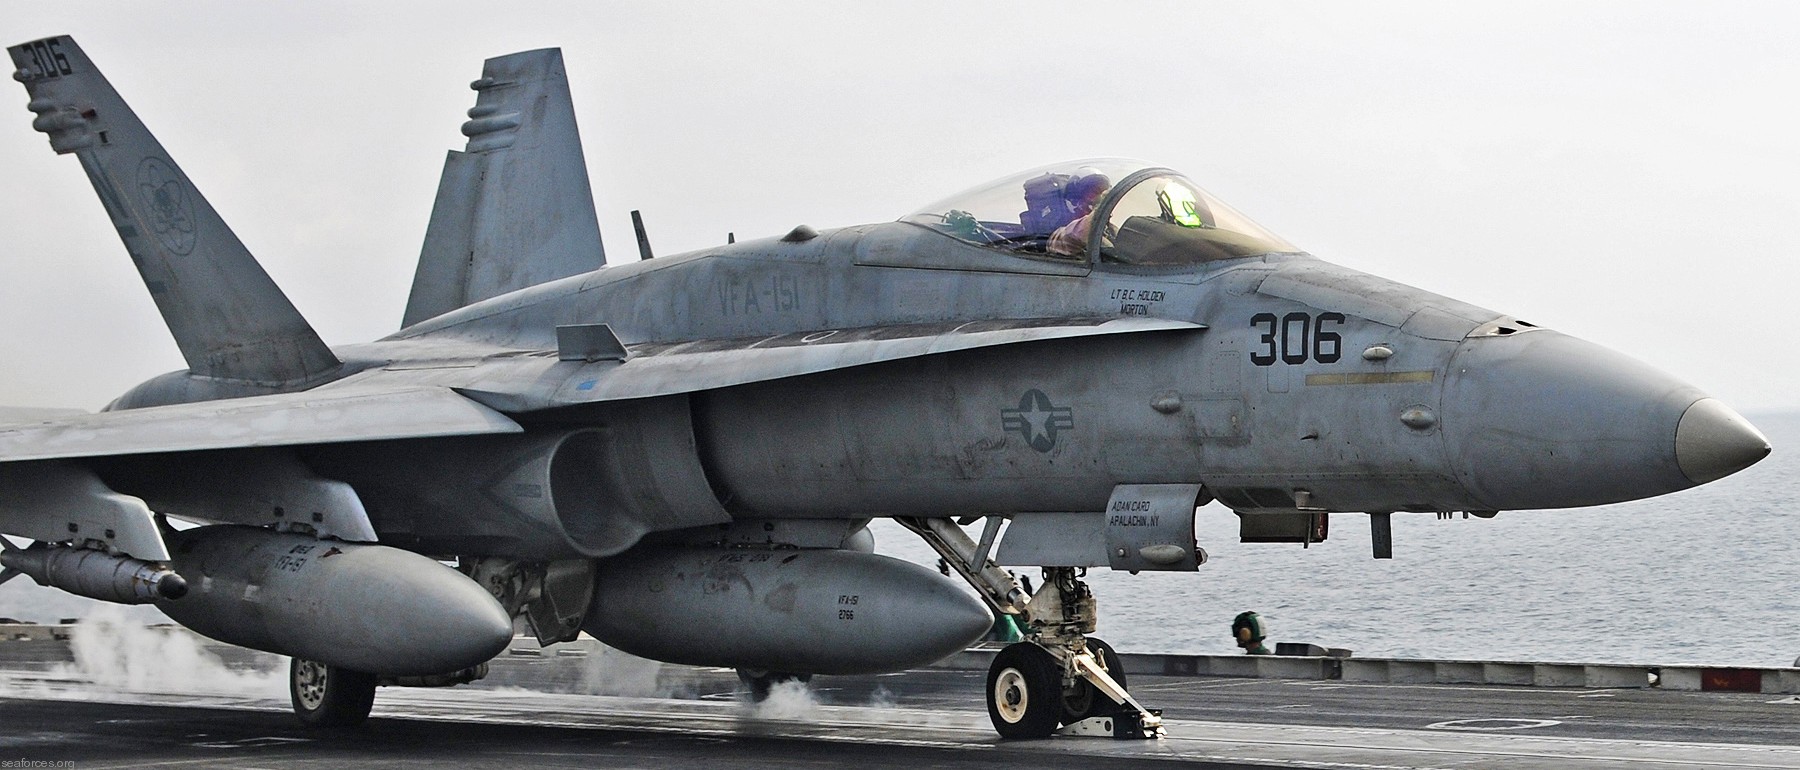 vfa-151 vigilantes strike fighter squadron navy f/a-18c hornet carrier air wing cvw-2 uss abraham lincoln cvn-72 40